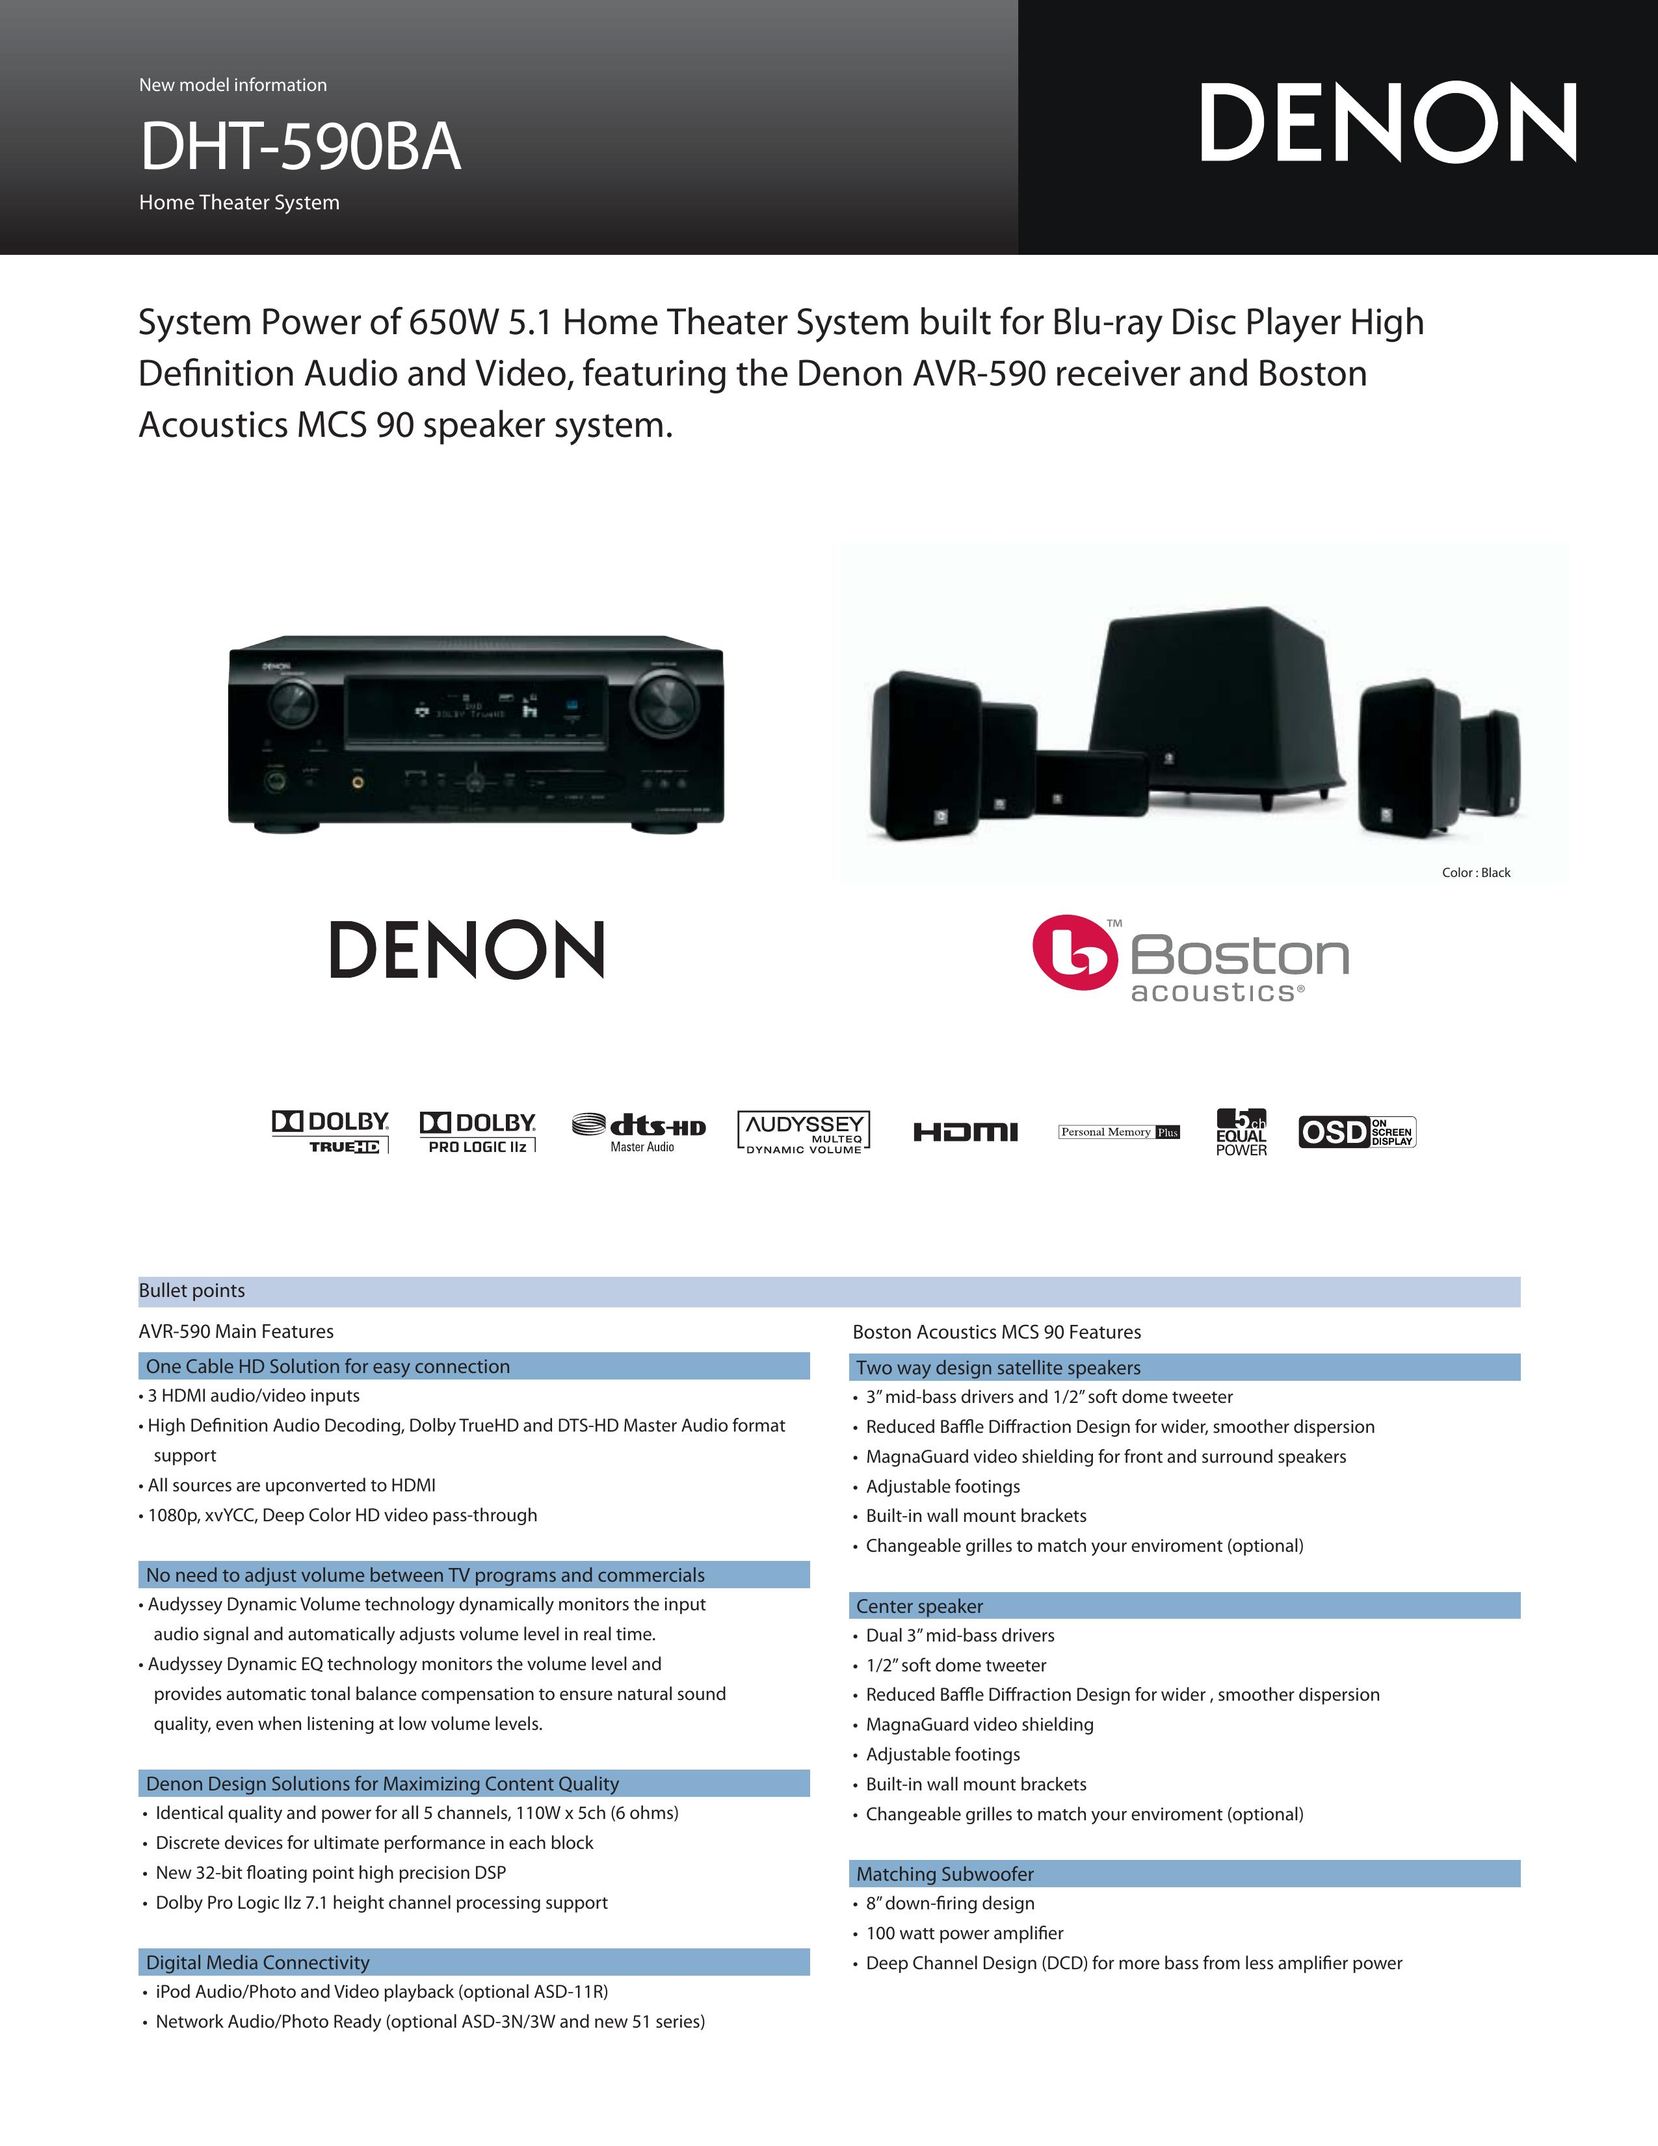 Denon 650W Home Theater System User Manual